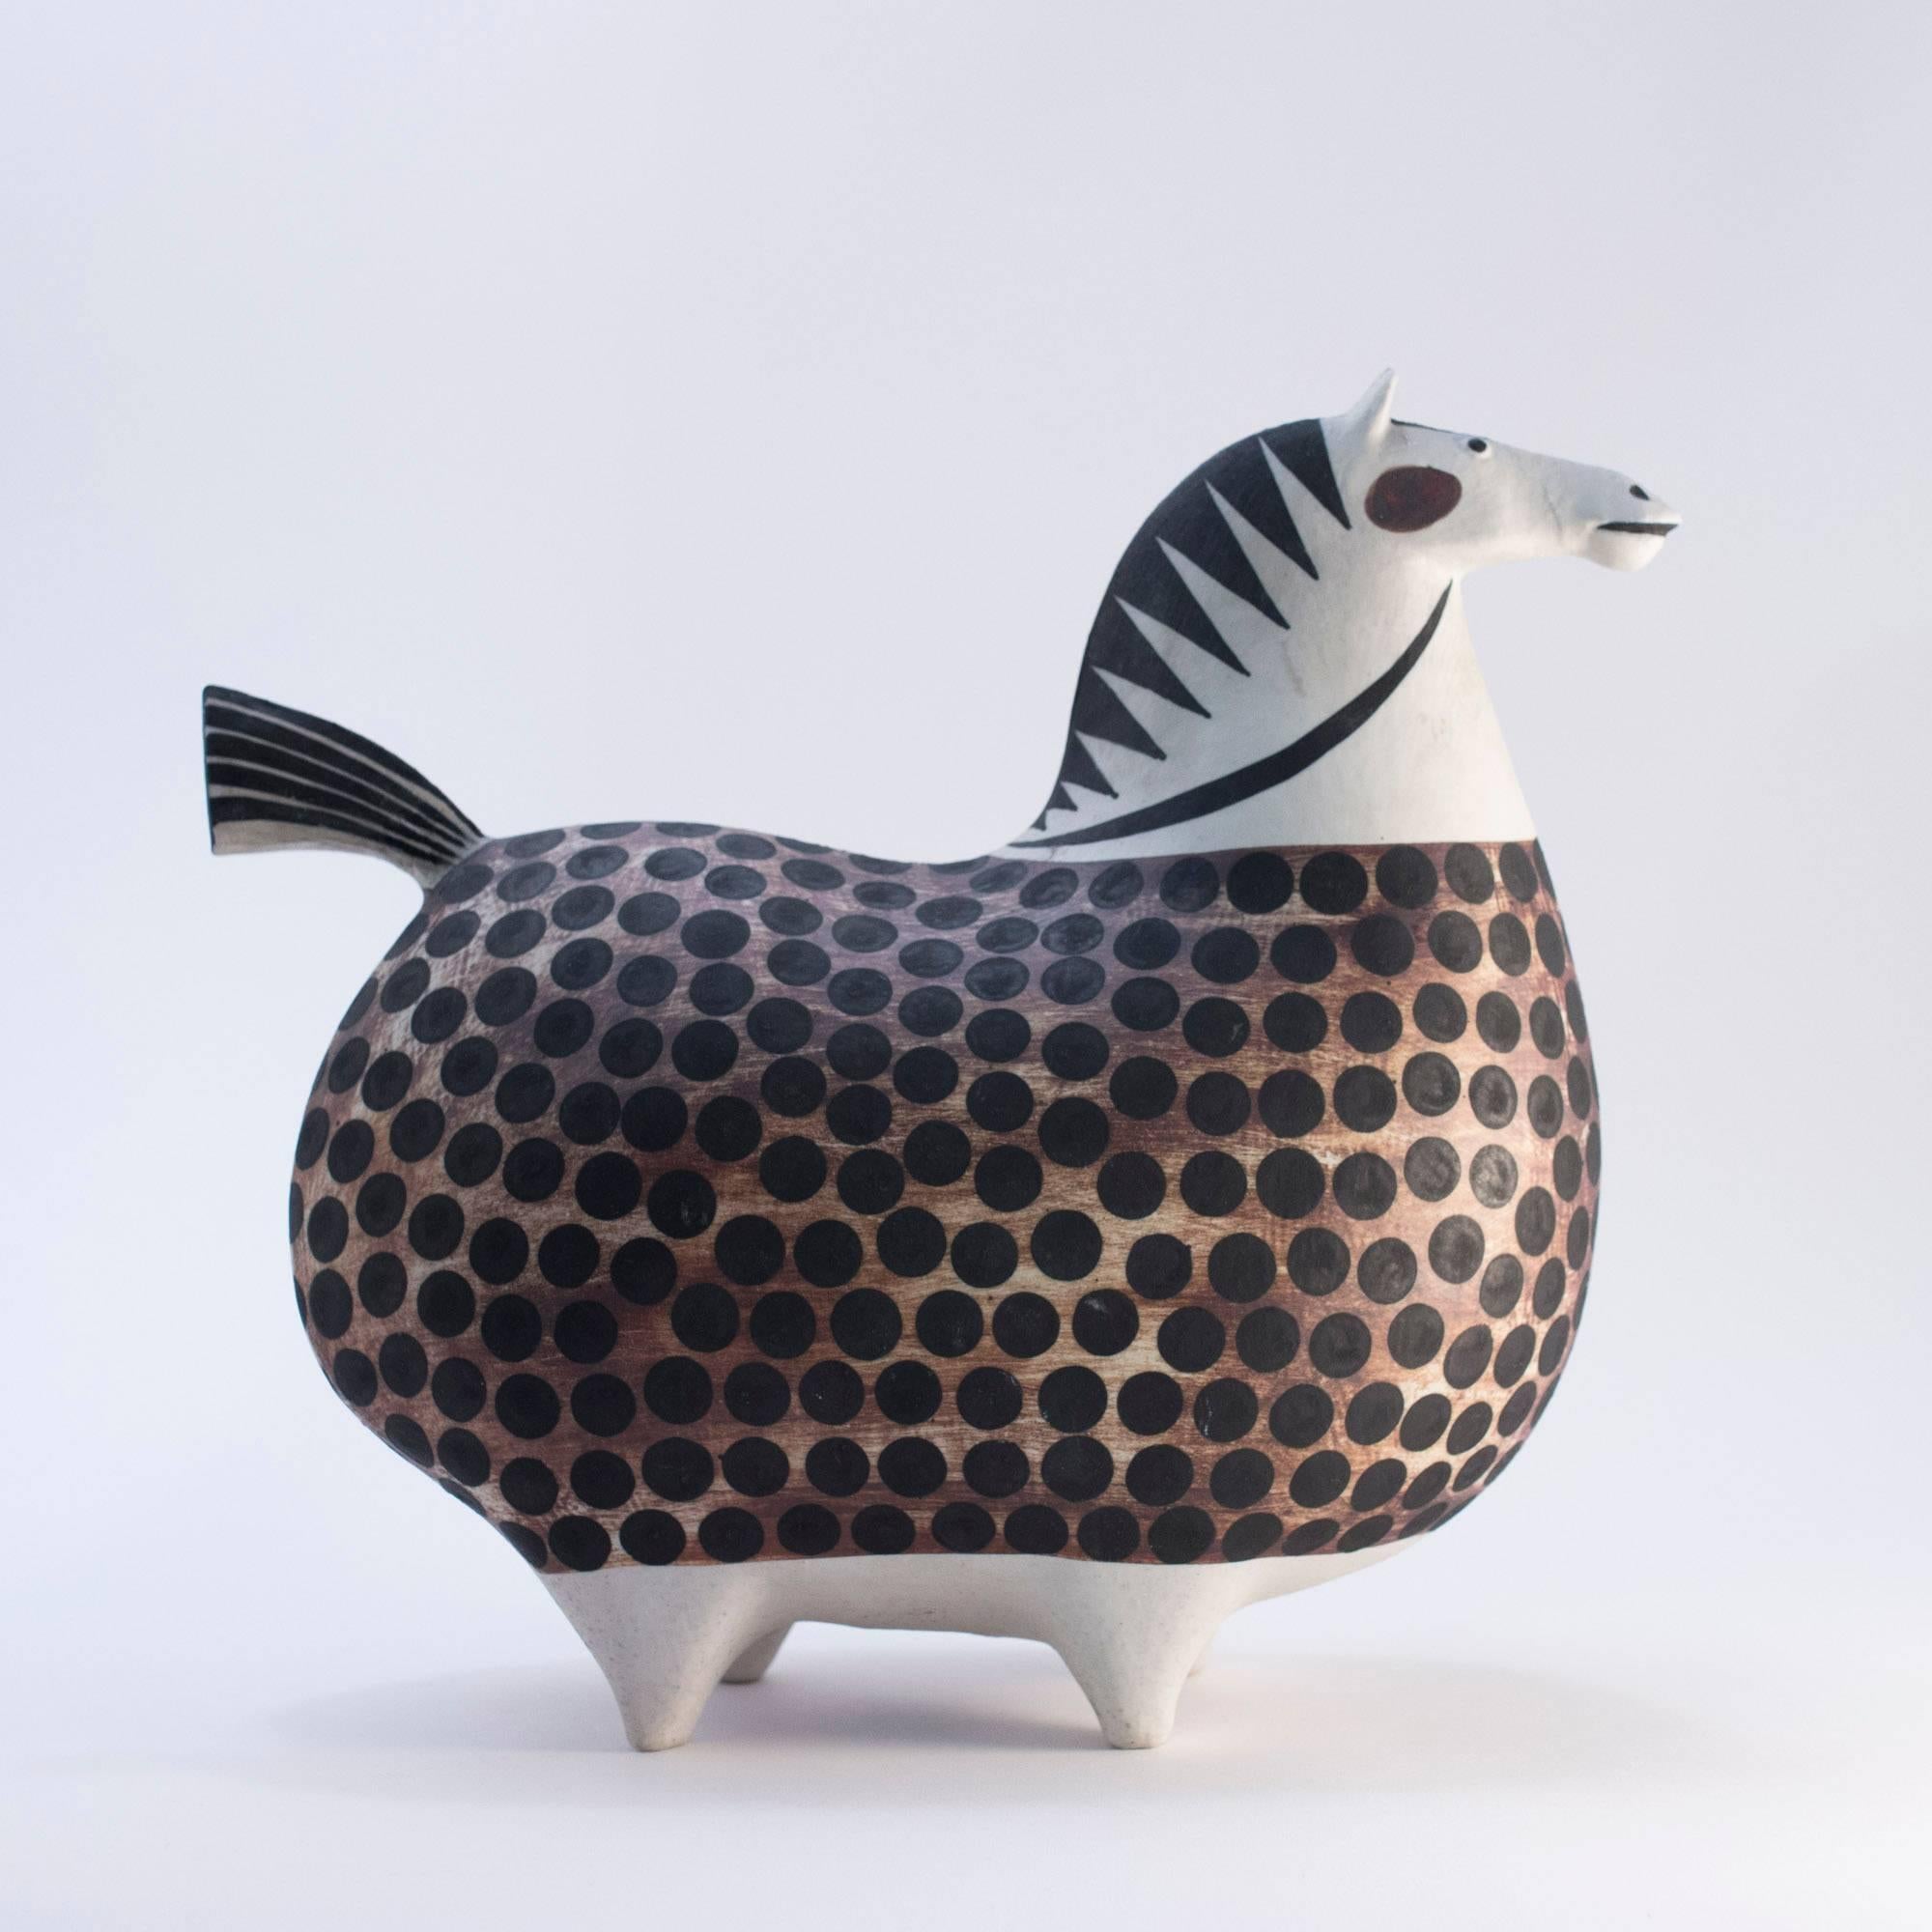 Enchanting ceramic horse figurine by Stig Lindberg, called 